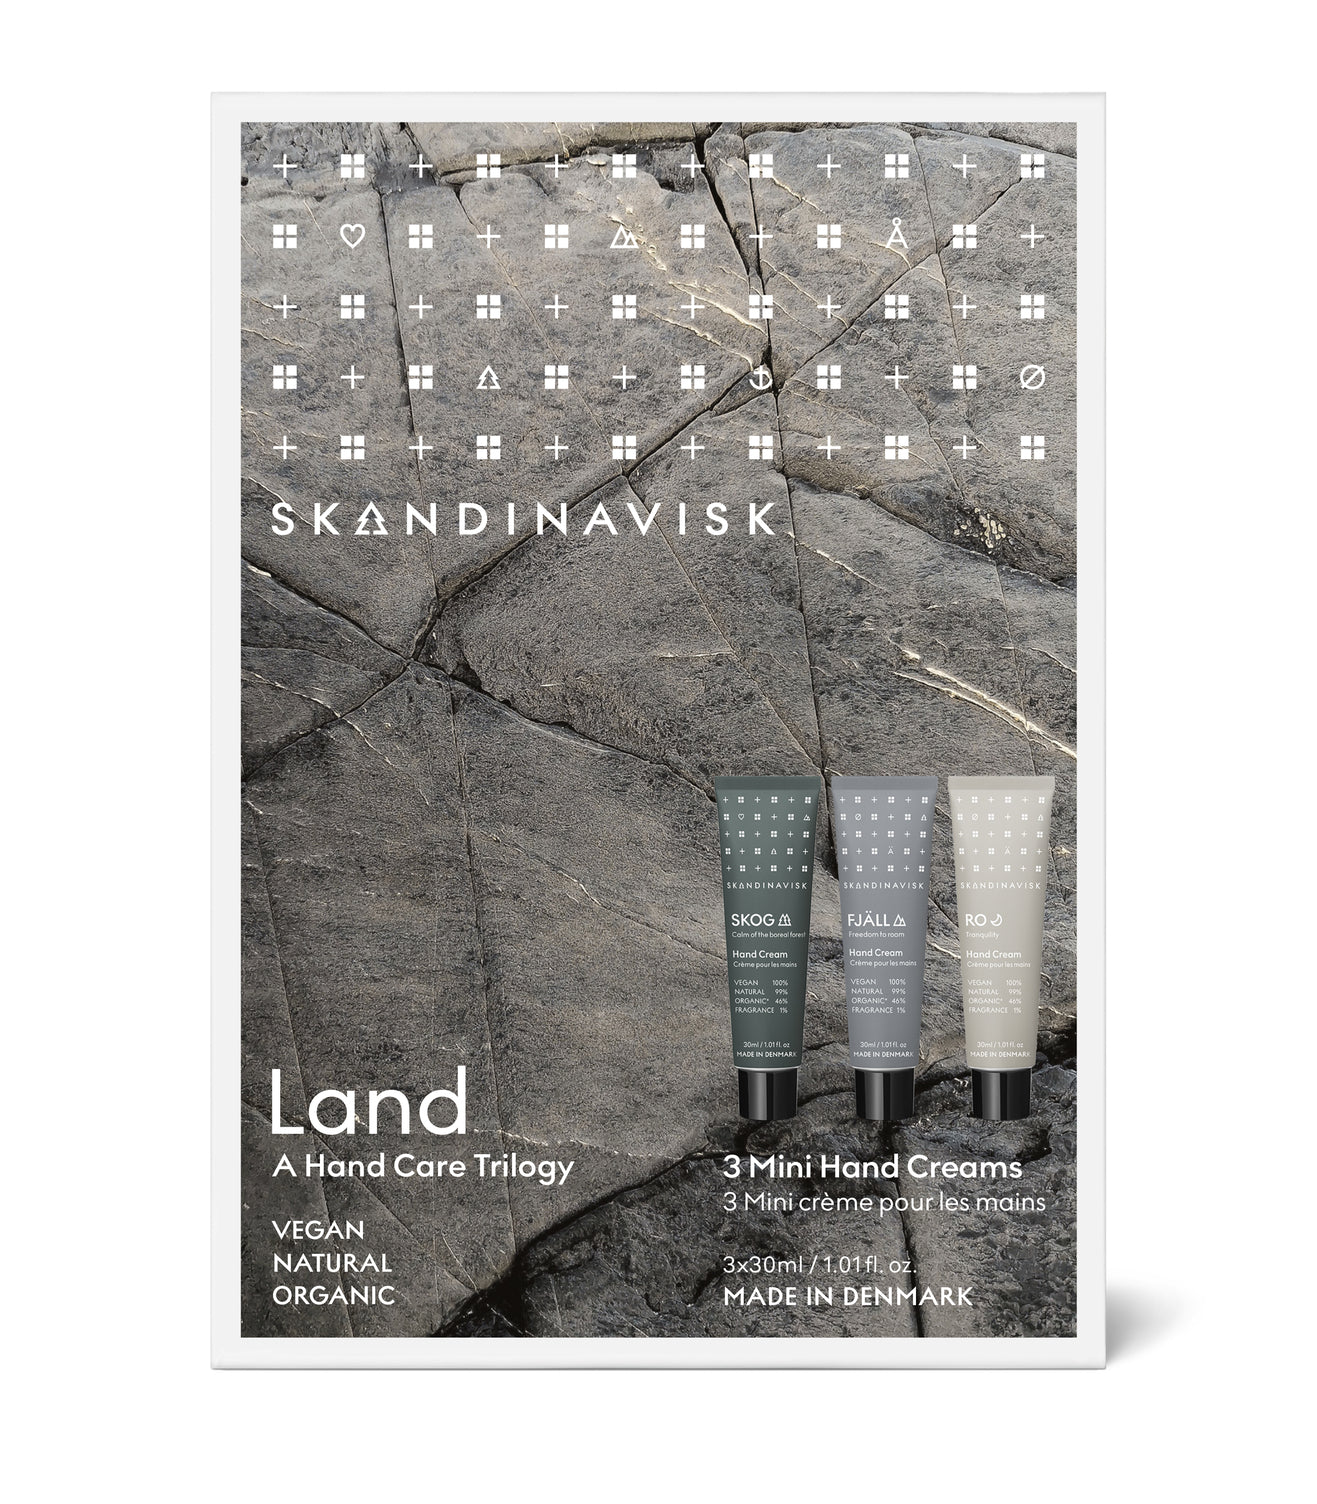 Skandinavisk Land Hand Care Trilogy